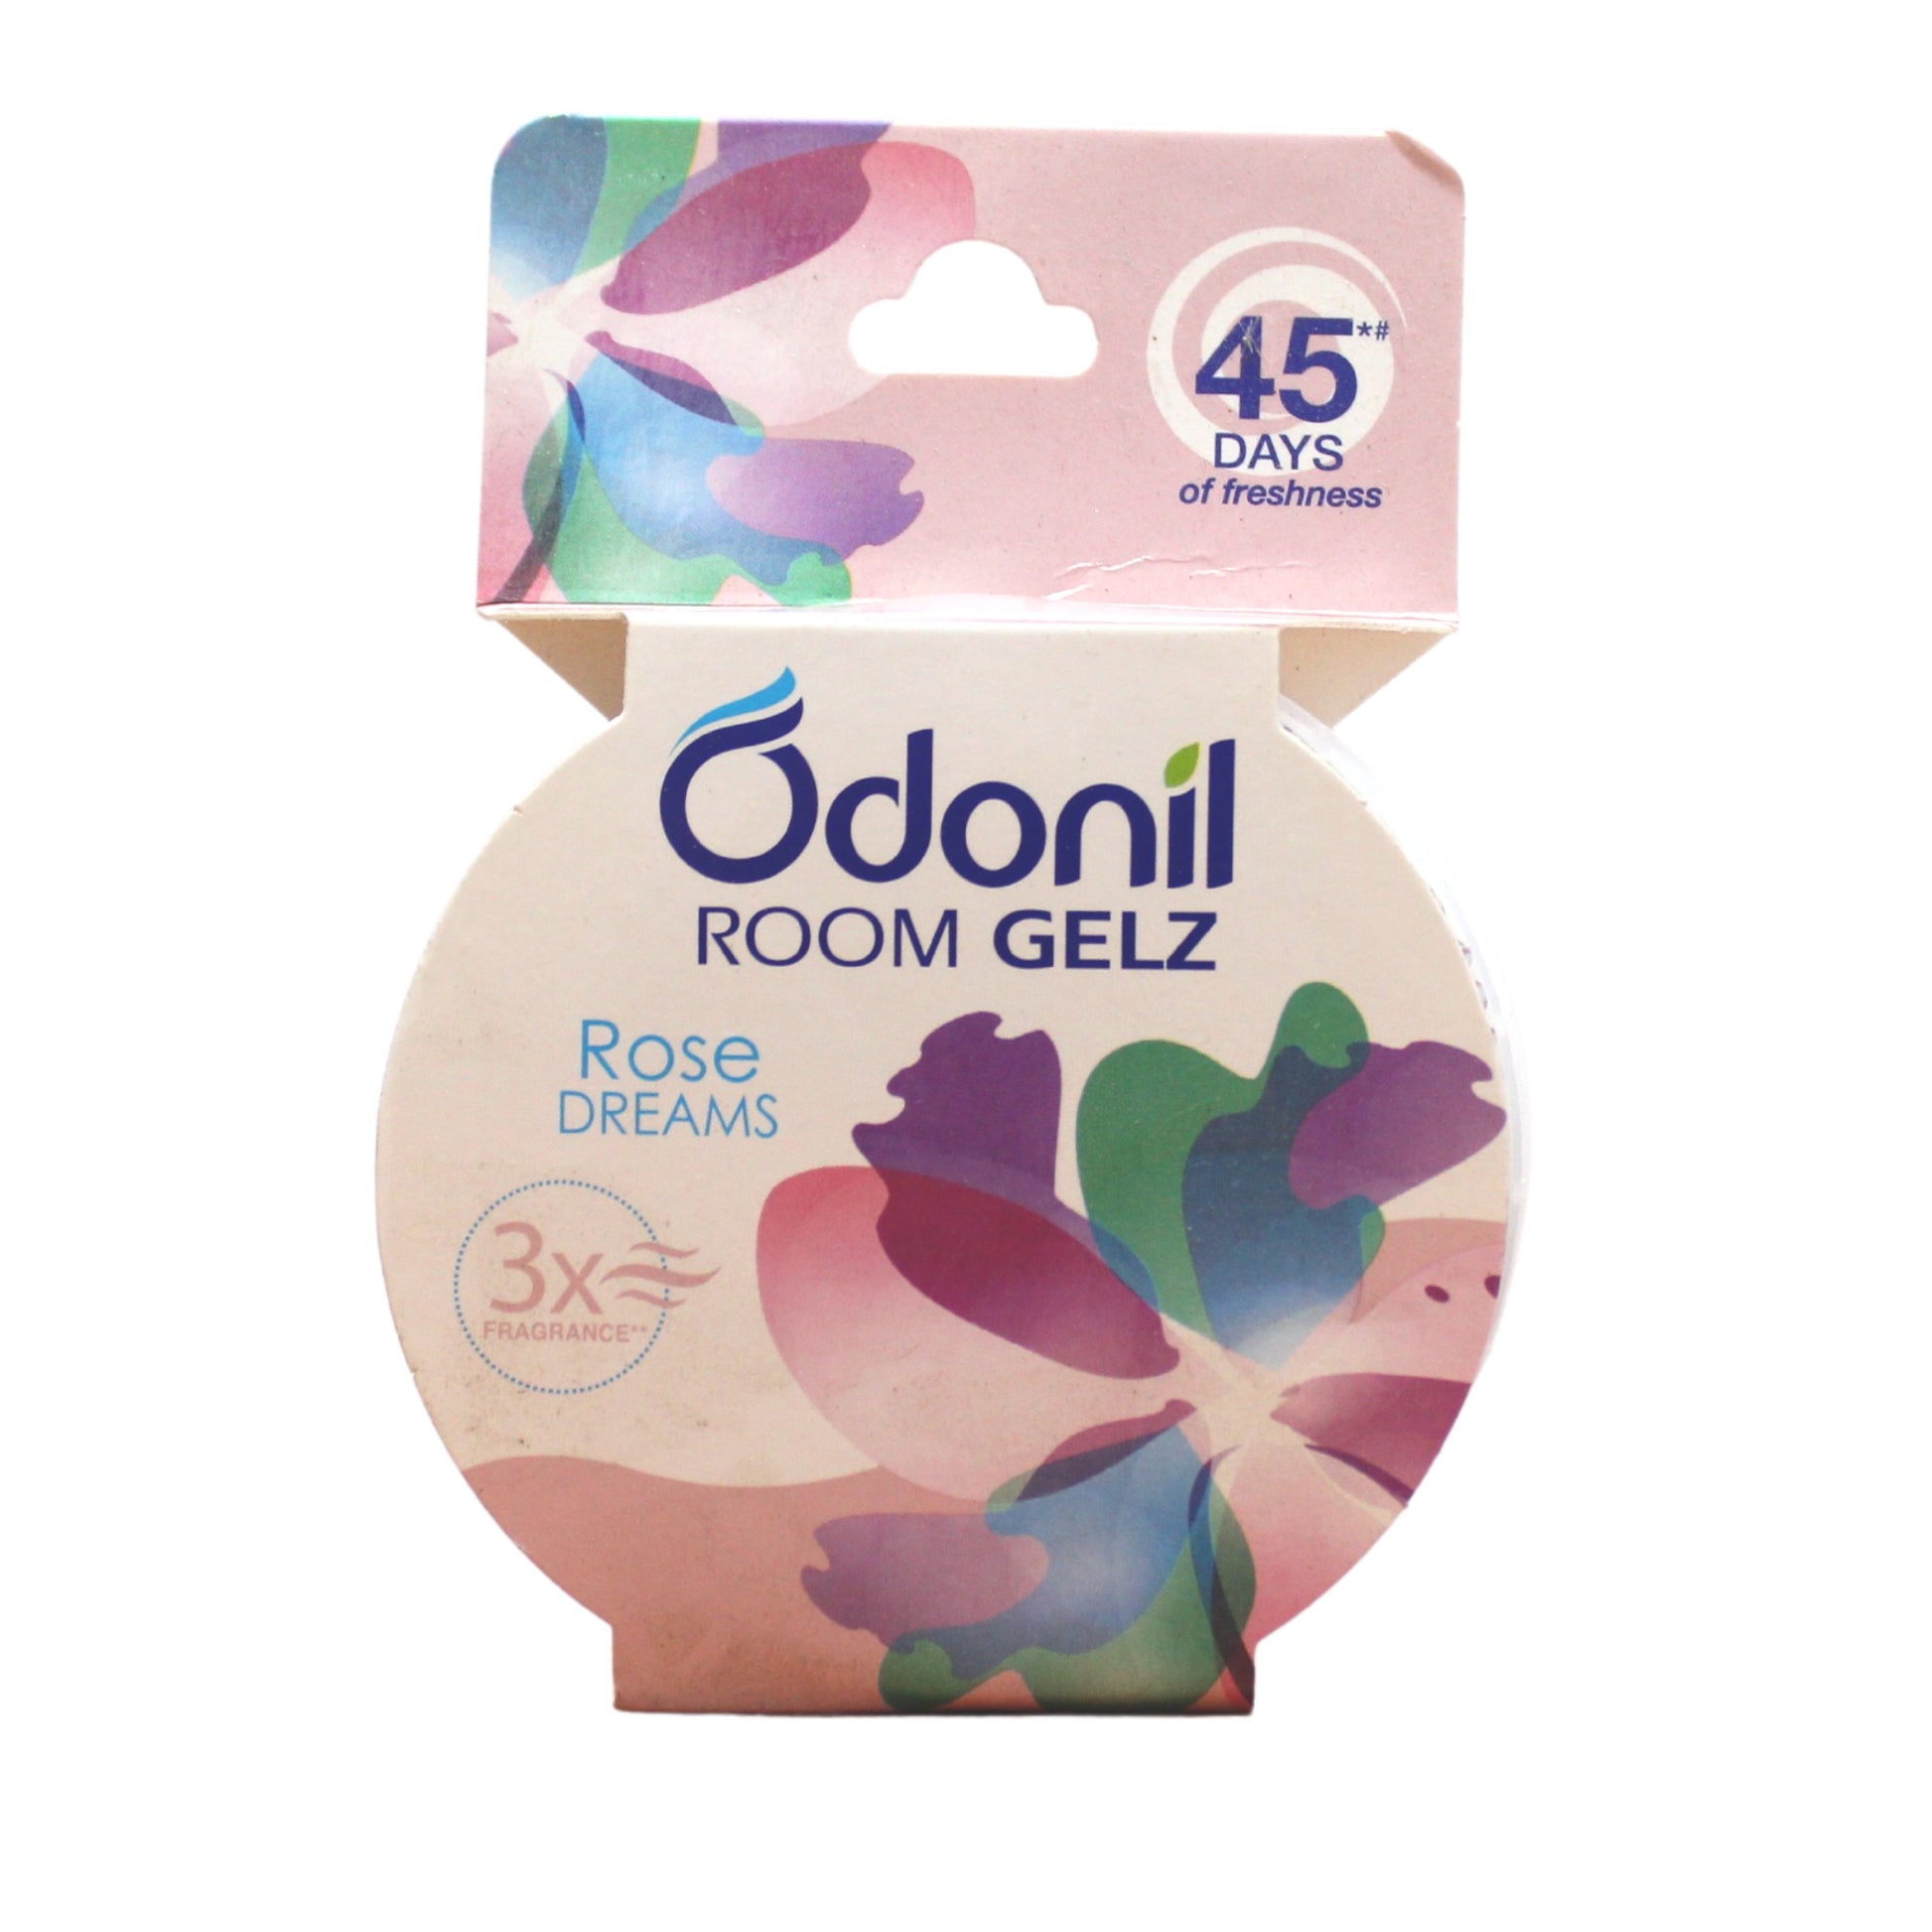 Odonil Room Gelz 75gm - Rose dreams Dabur